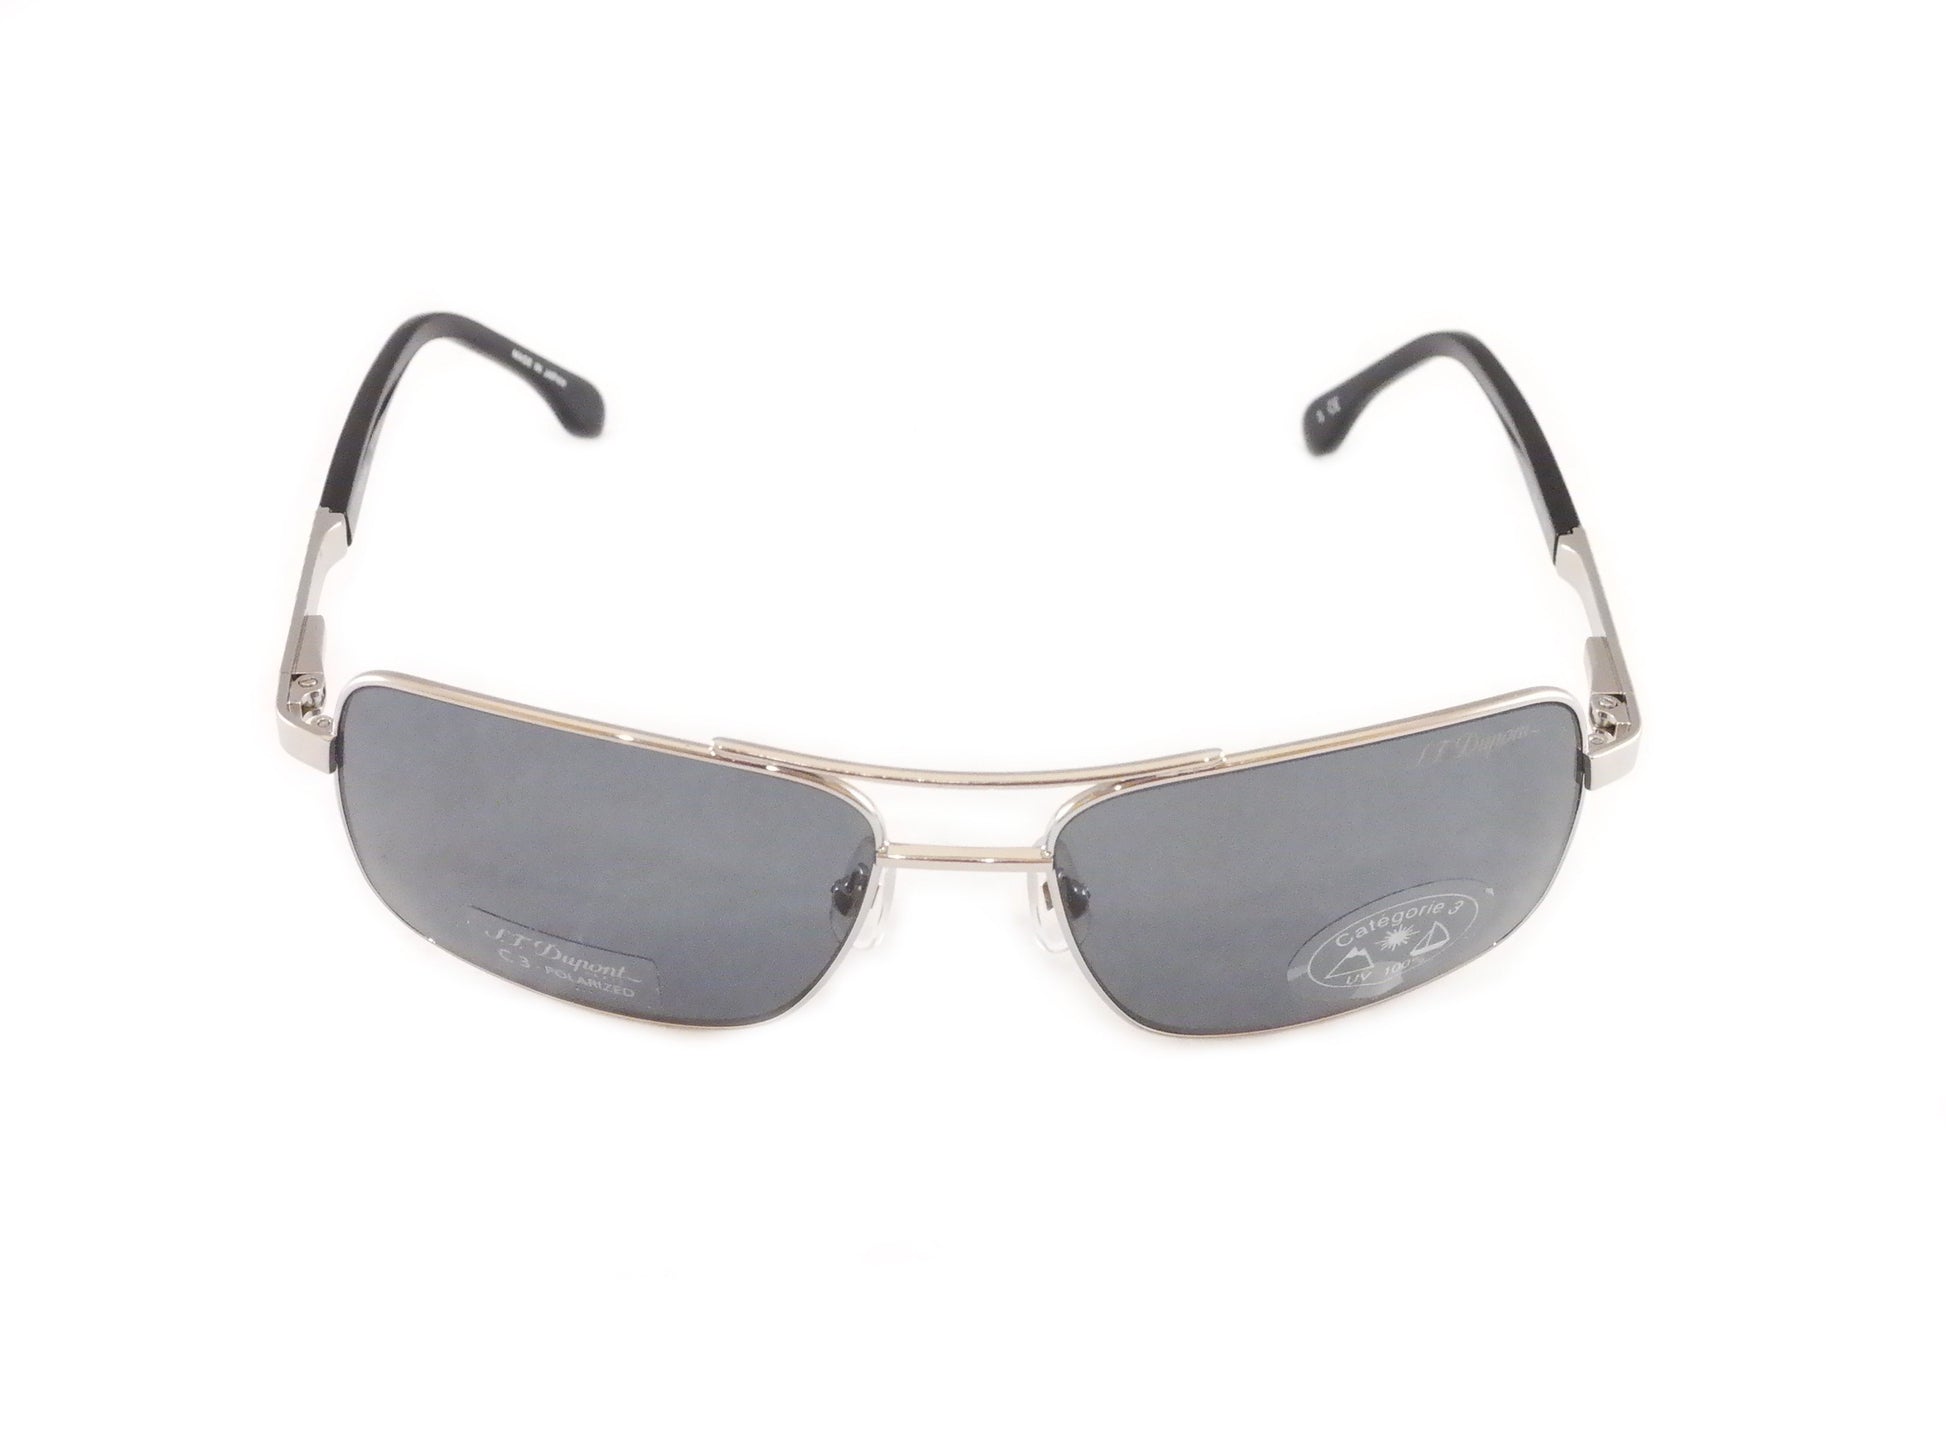 S. T. Dupont Sunglasses DP7003 Polarized Lenses Metal Japan 100% UV Category 3 - Frame Bay